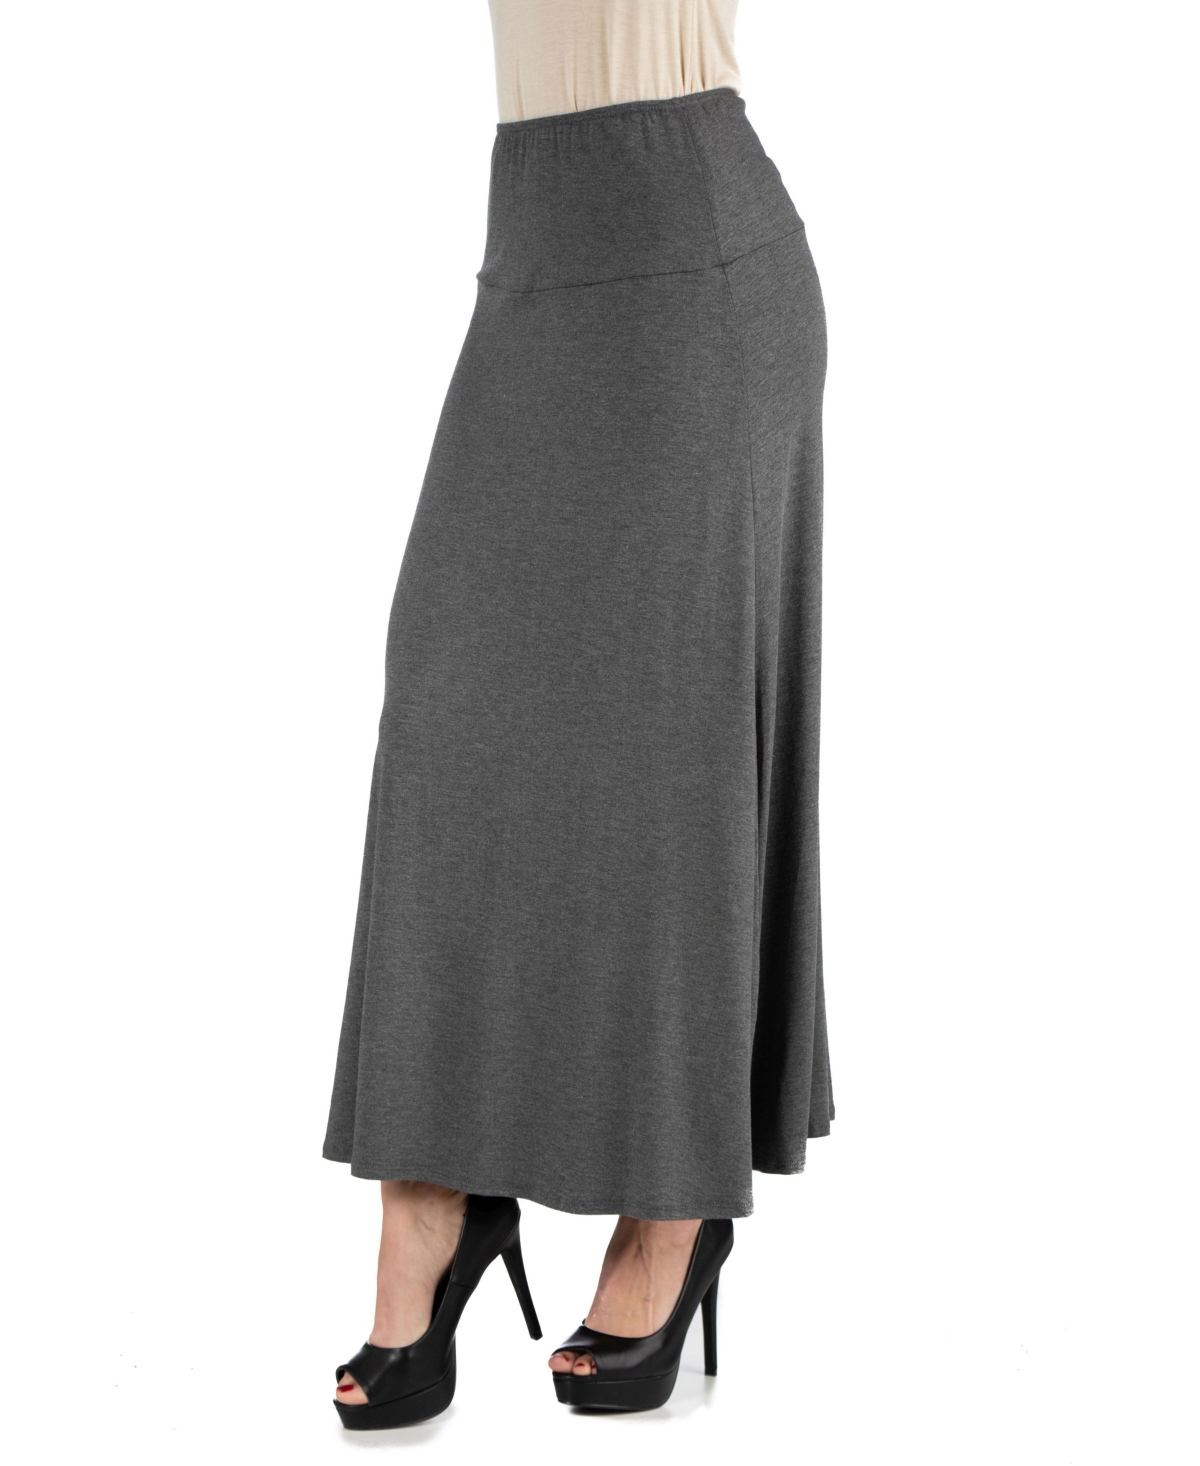 Women's Elastic Waist Maxi Skirt - Wine